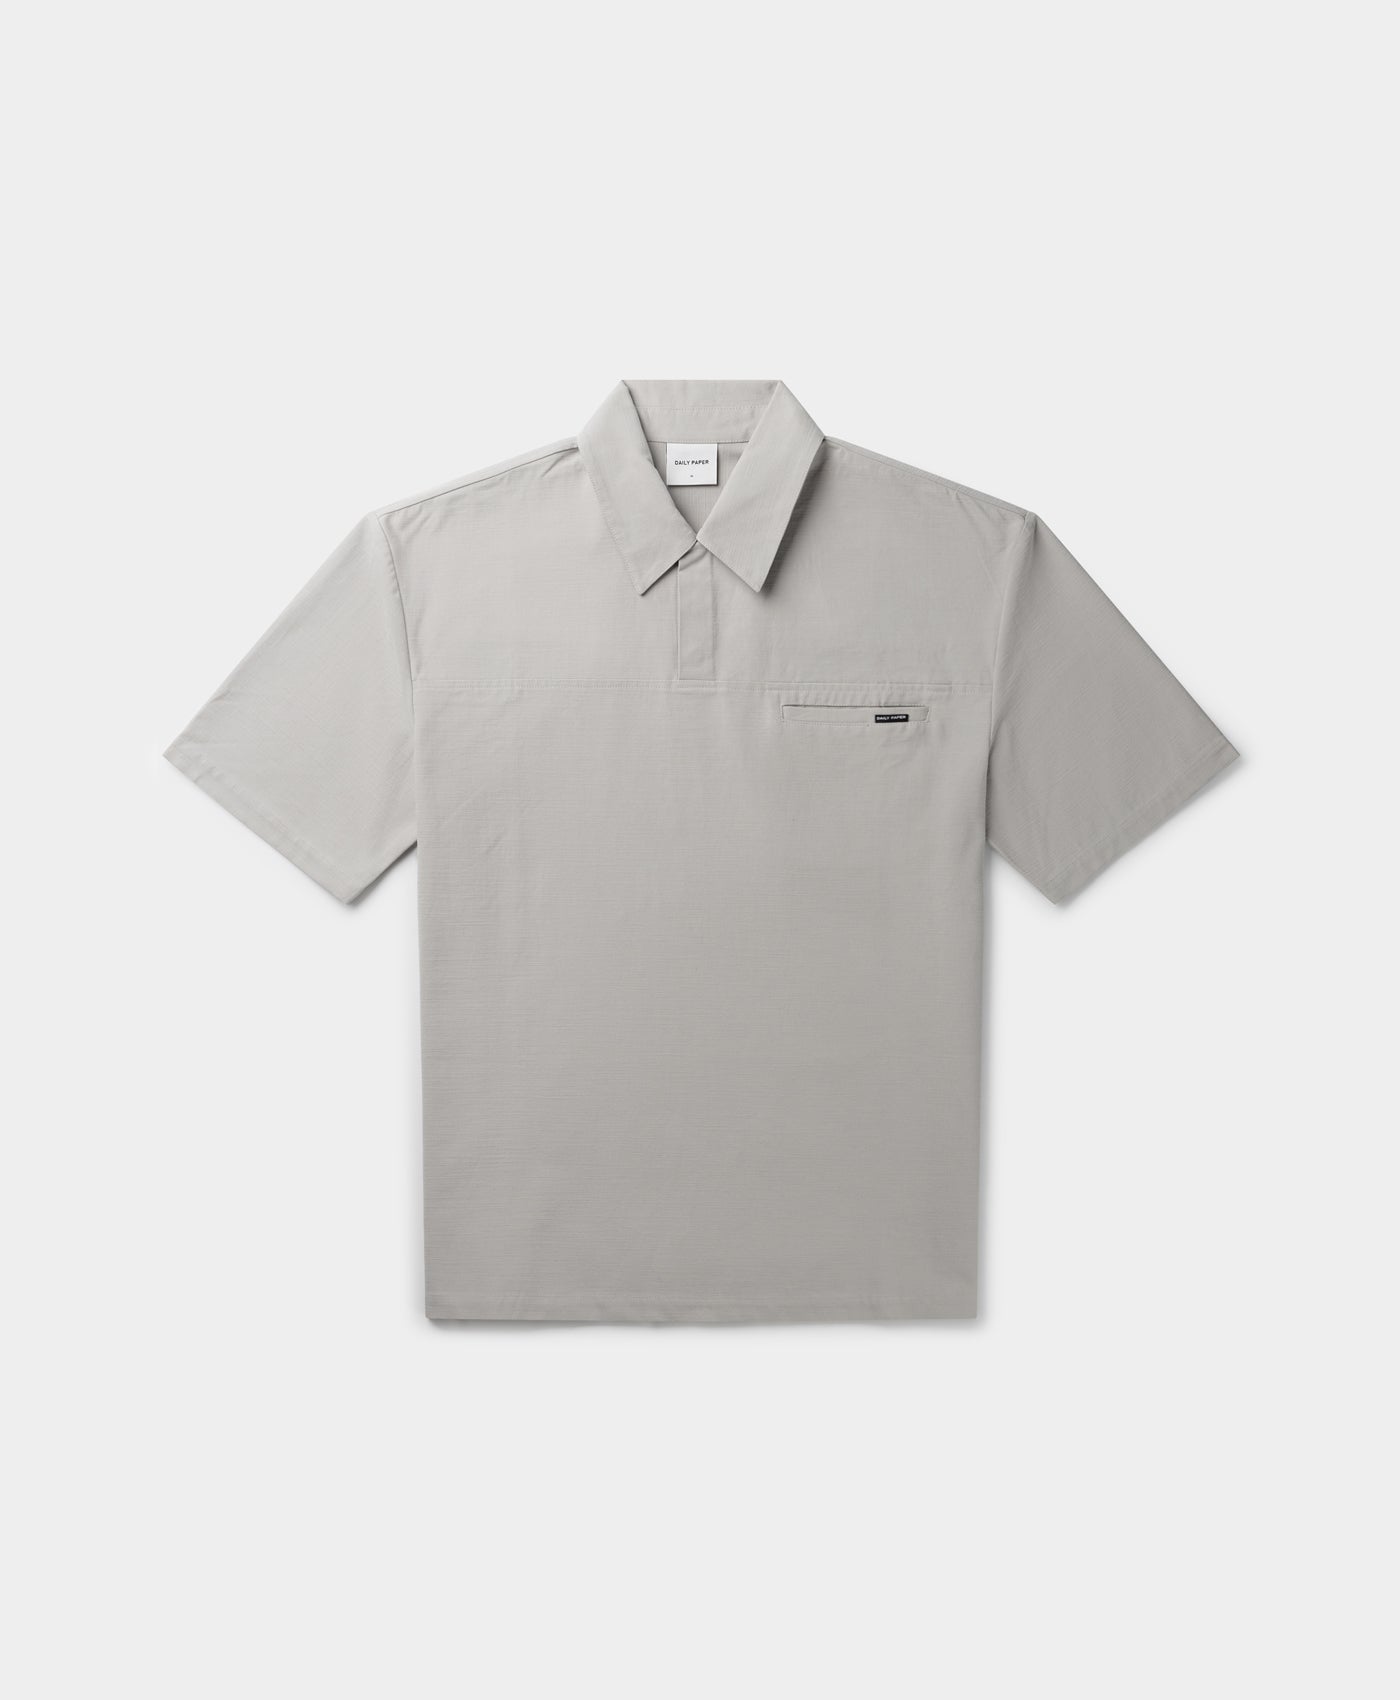 DP - Sleet Grey Dembe Relaxed Shirt - Packshot - Front